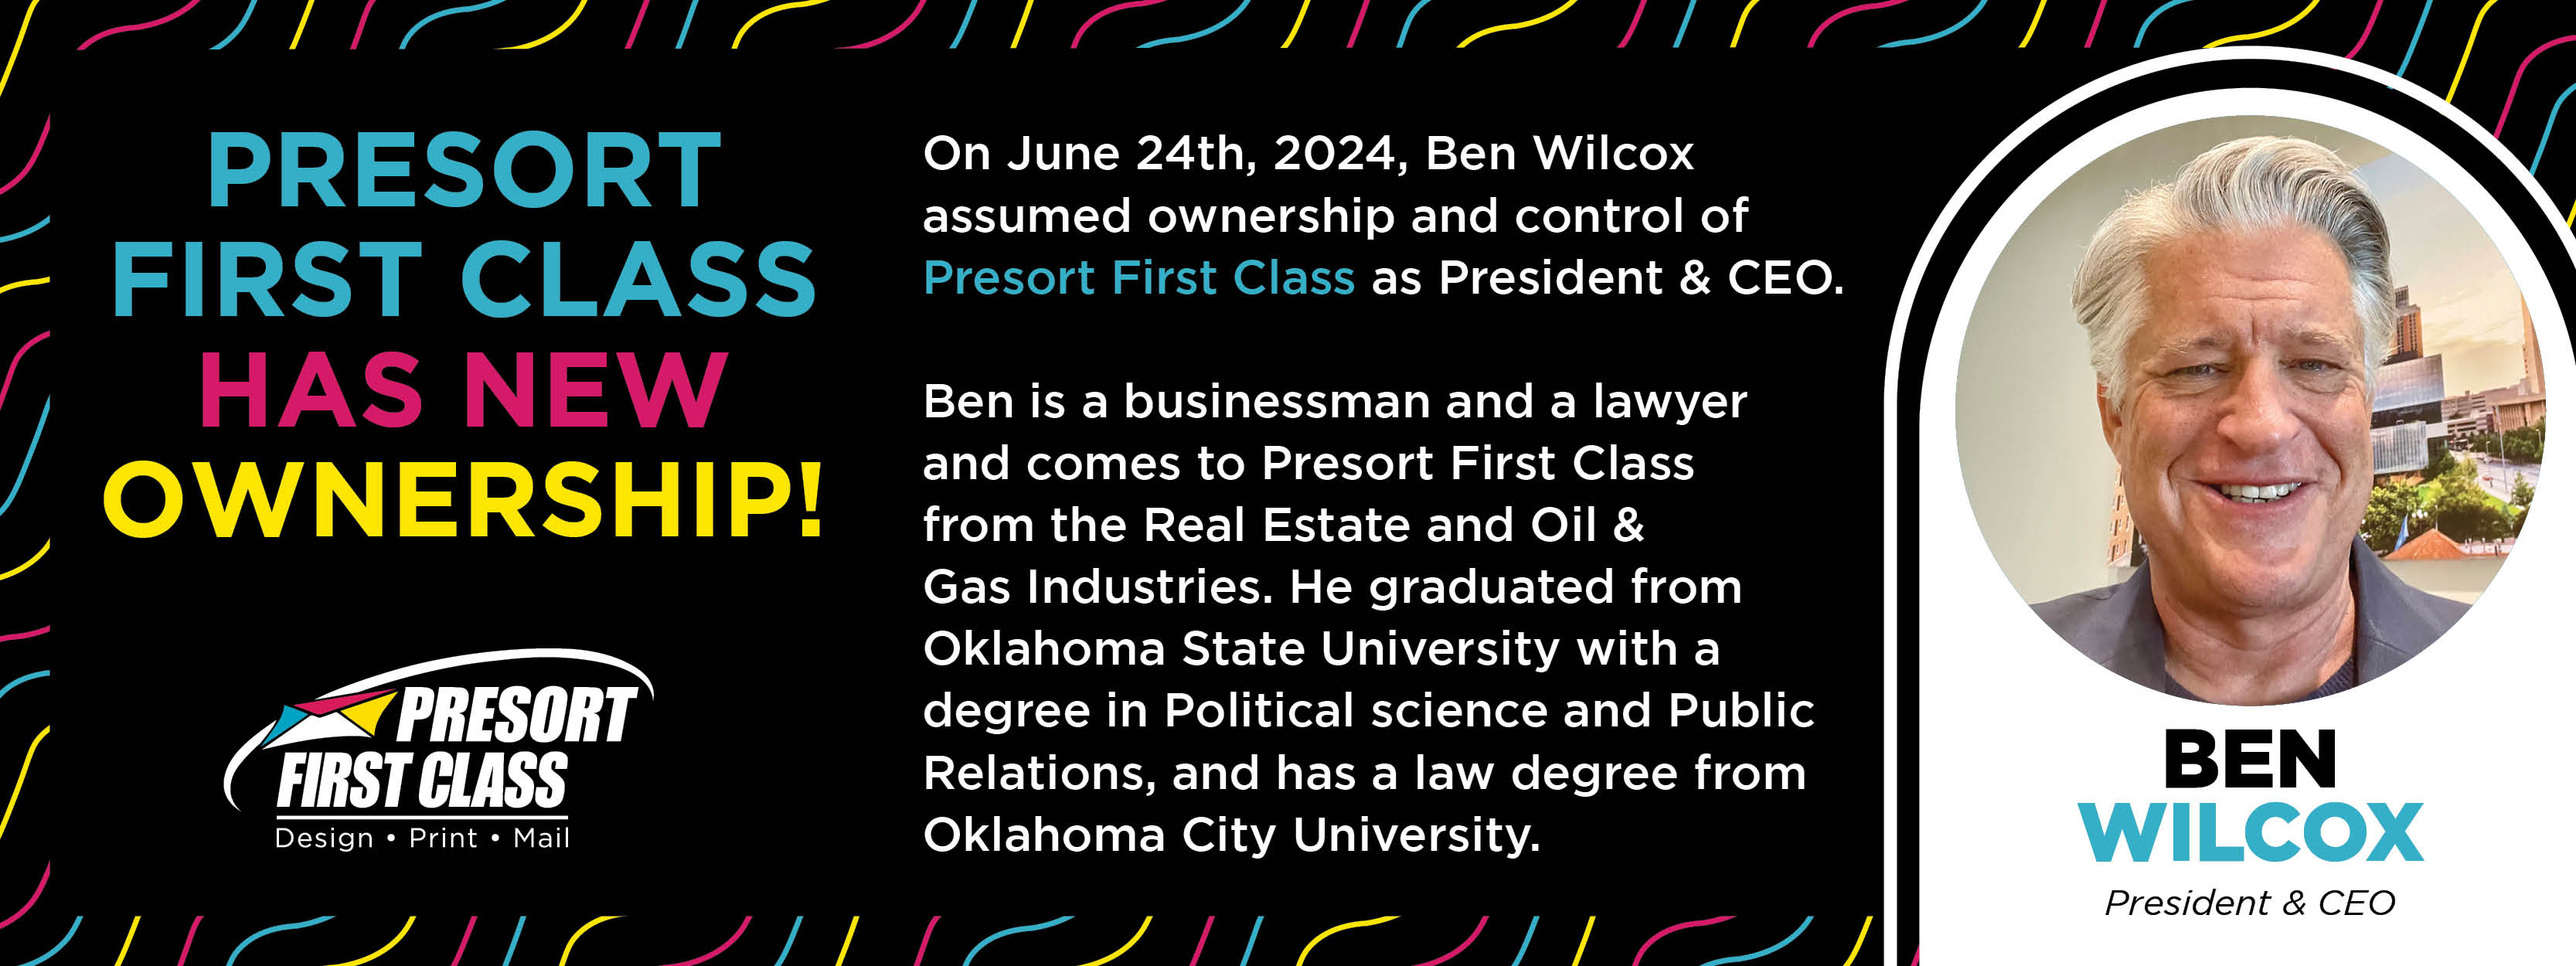 Ben Wilcox - President & CEO